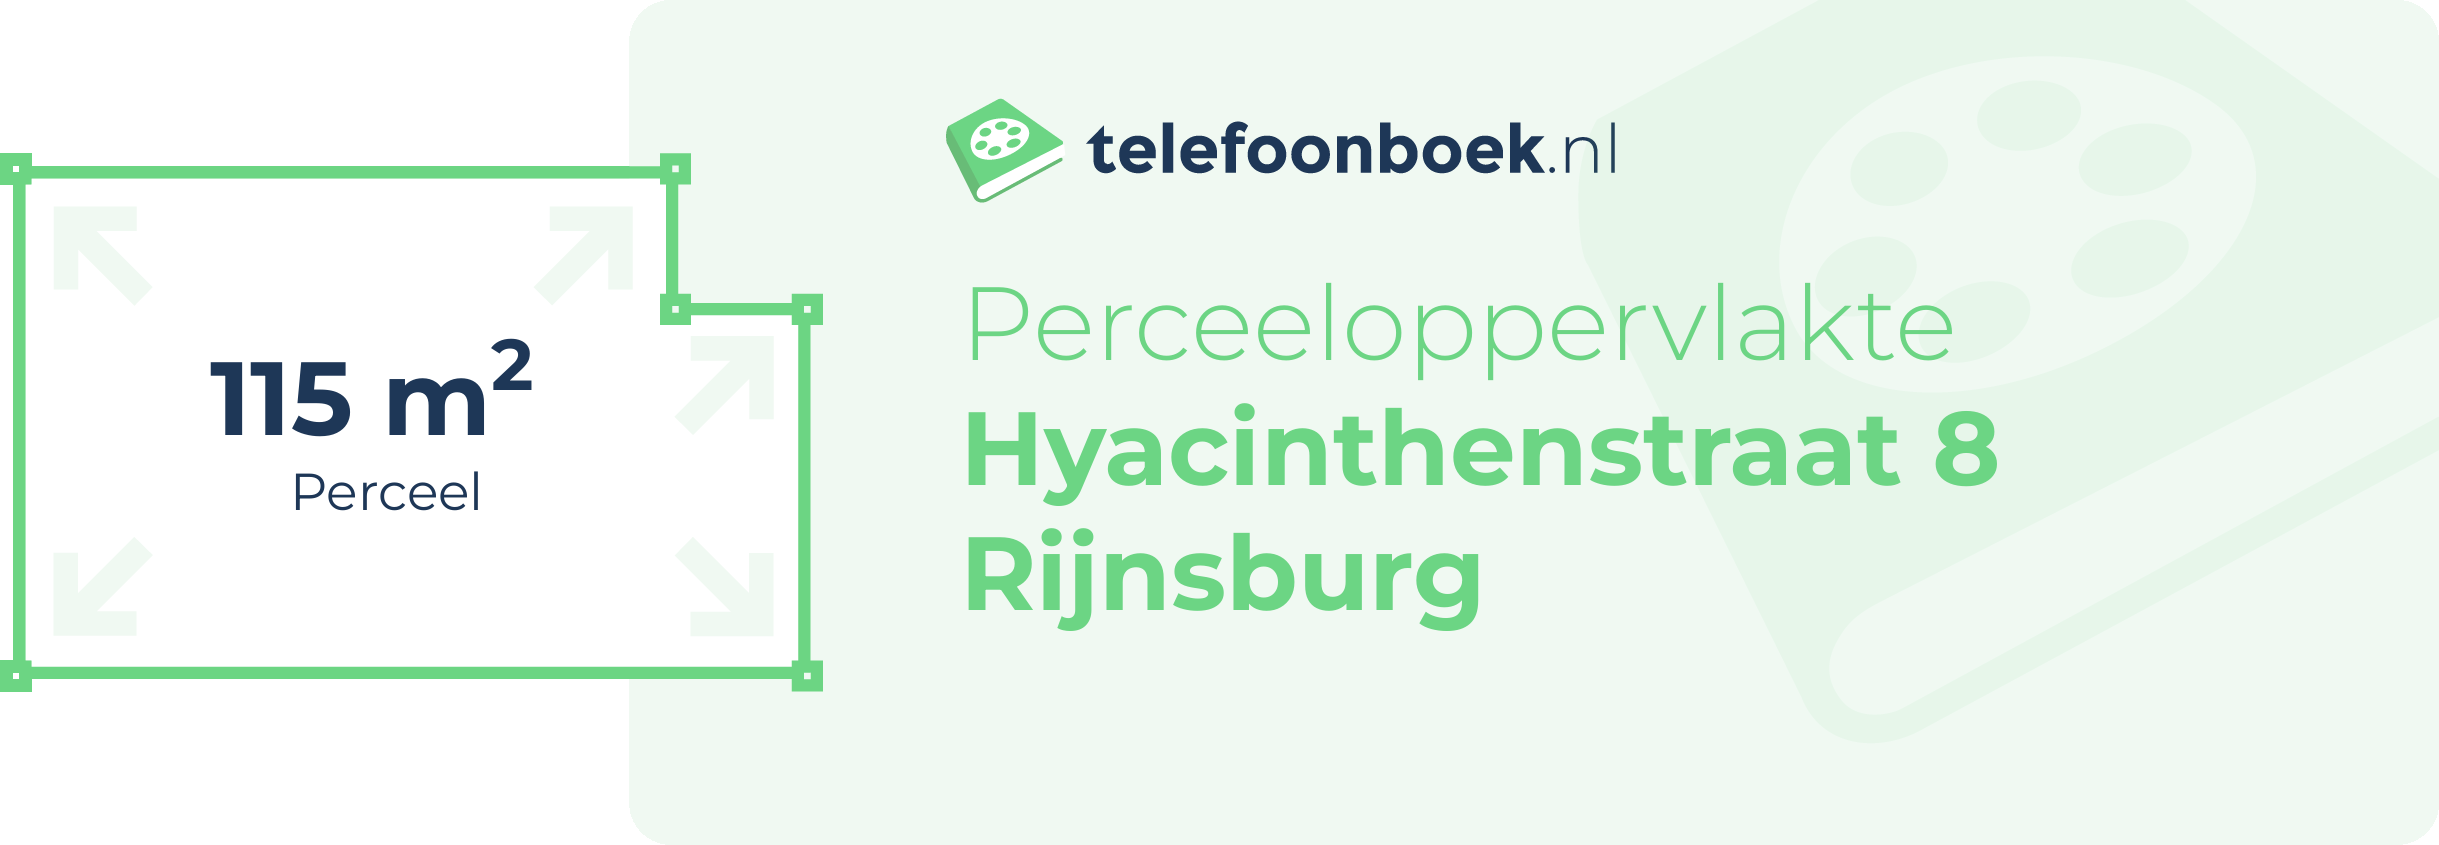 Perceeloppervlakte Hyacinthenstraat 8 Rijnsburg